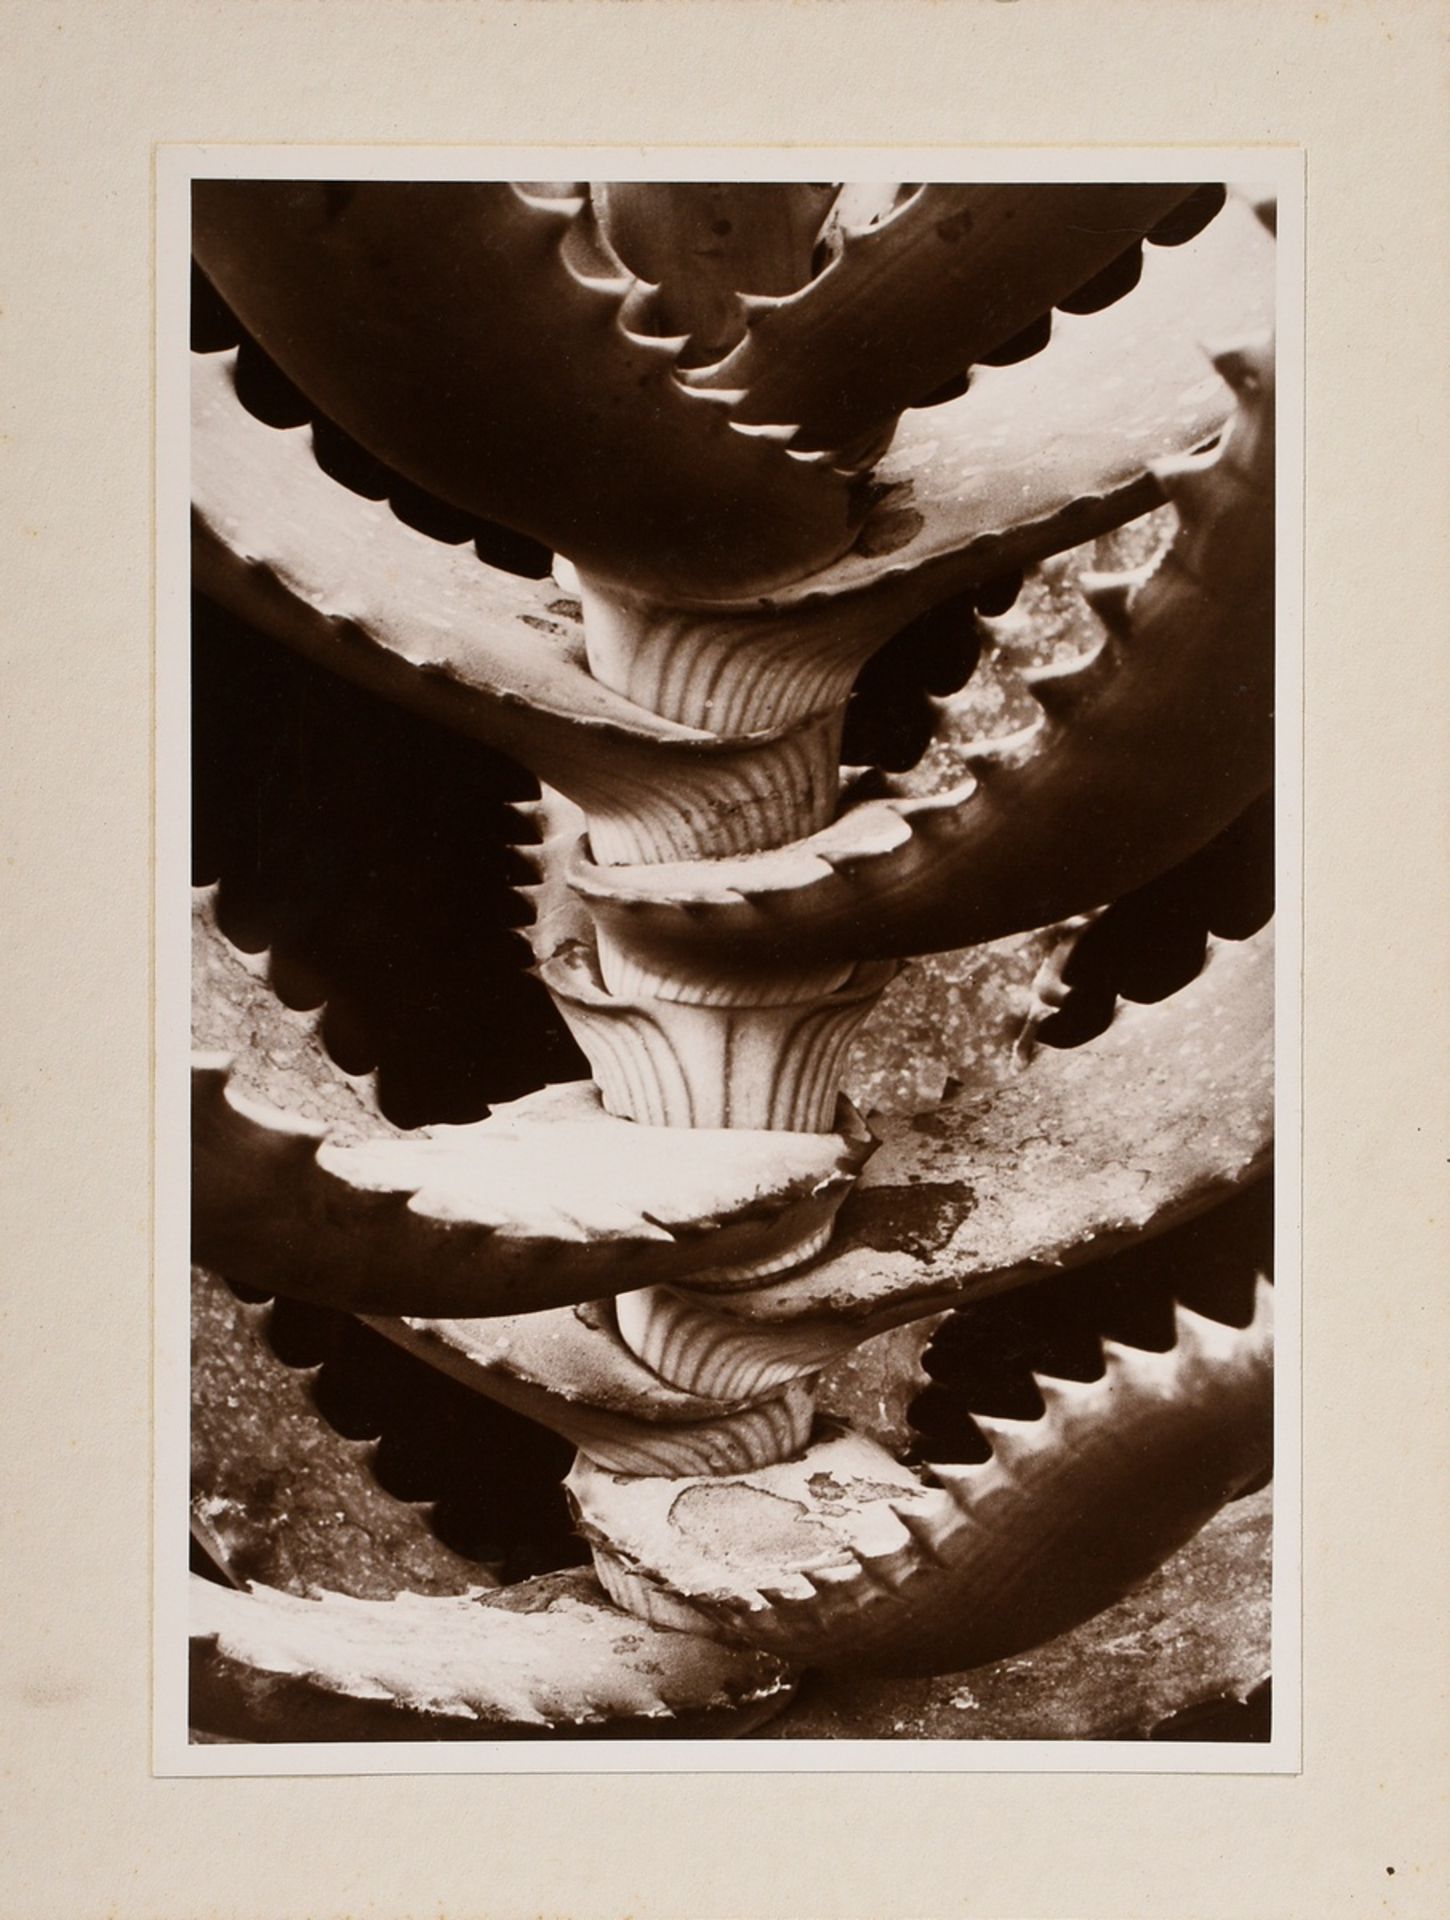 Renger-Patzsch, Albert (1897-1966) 'Plant study' (Aloe), photograph mounted on cardboard, verso sta - Image 2 of 3